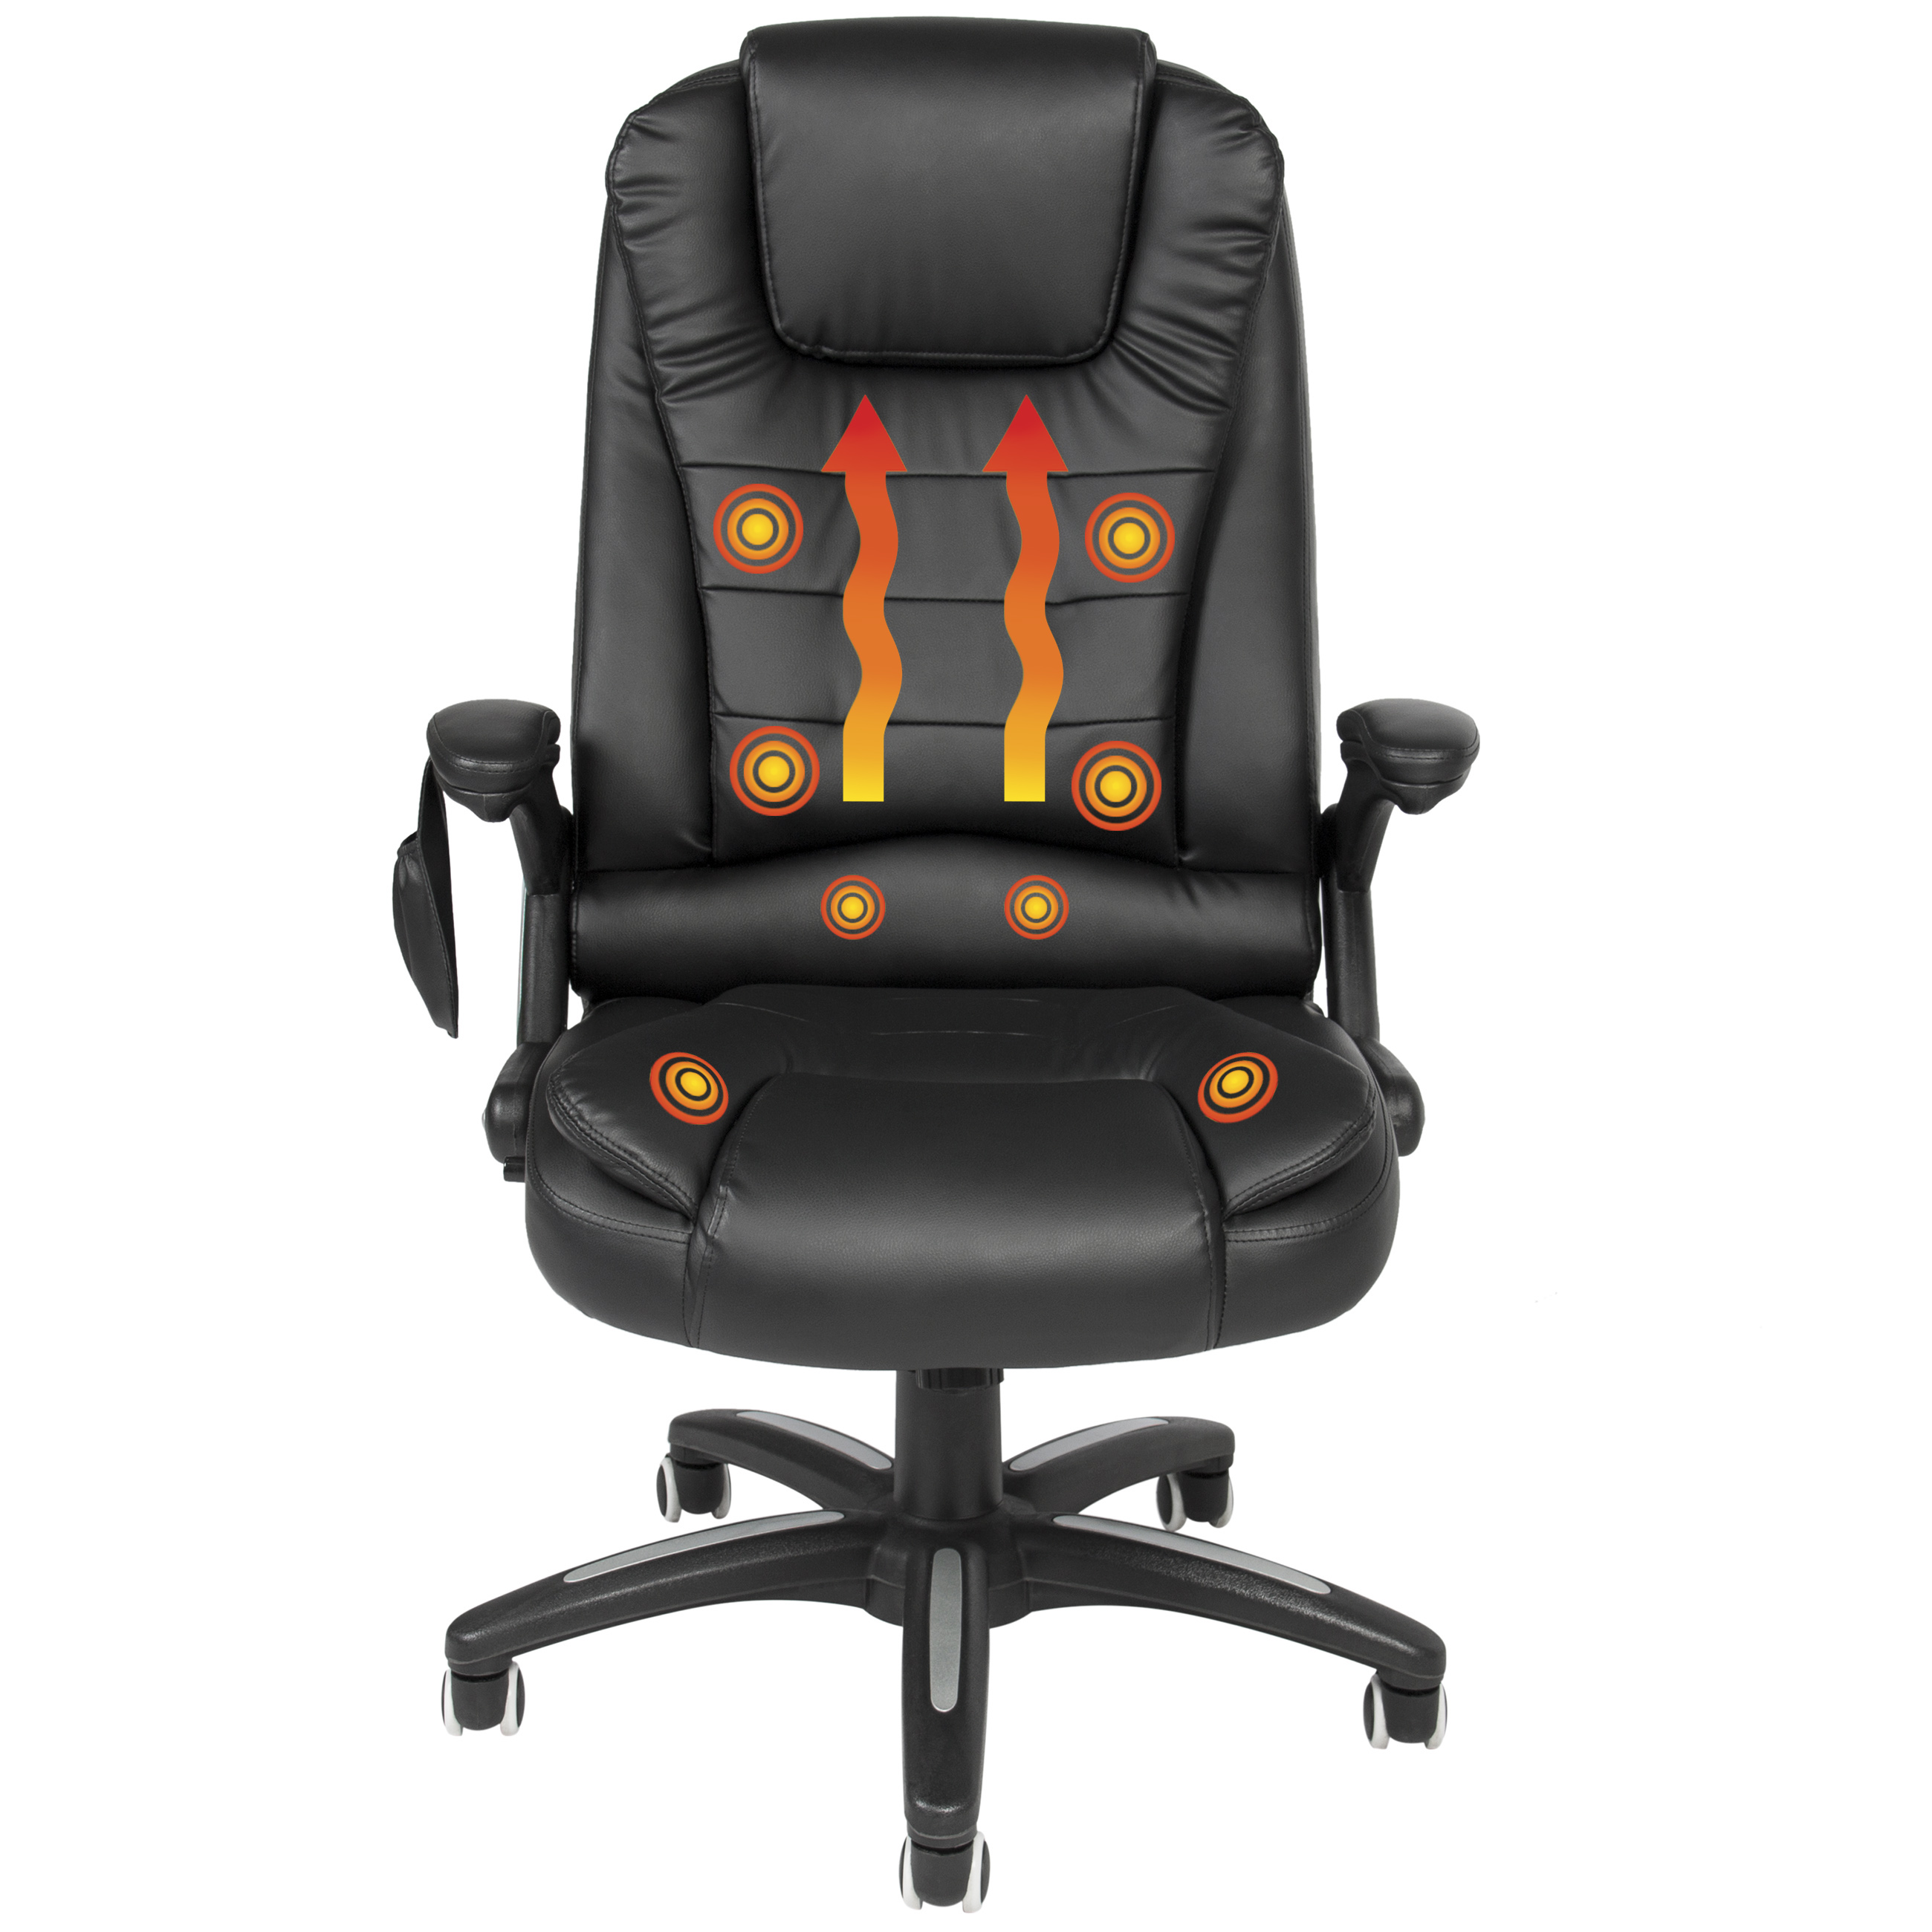 Bcp Executive Ergonomic Heated Vibrating Computer Office Massage Chair Black 816586024282 Ebay